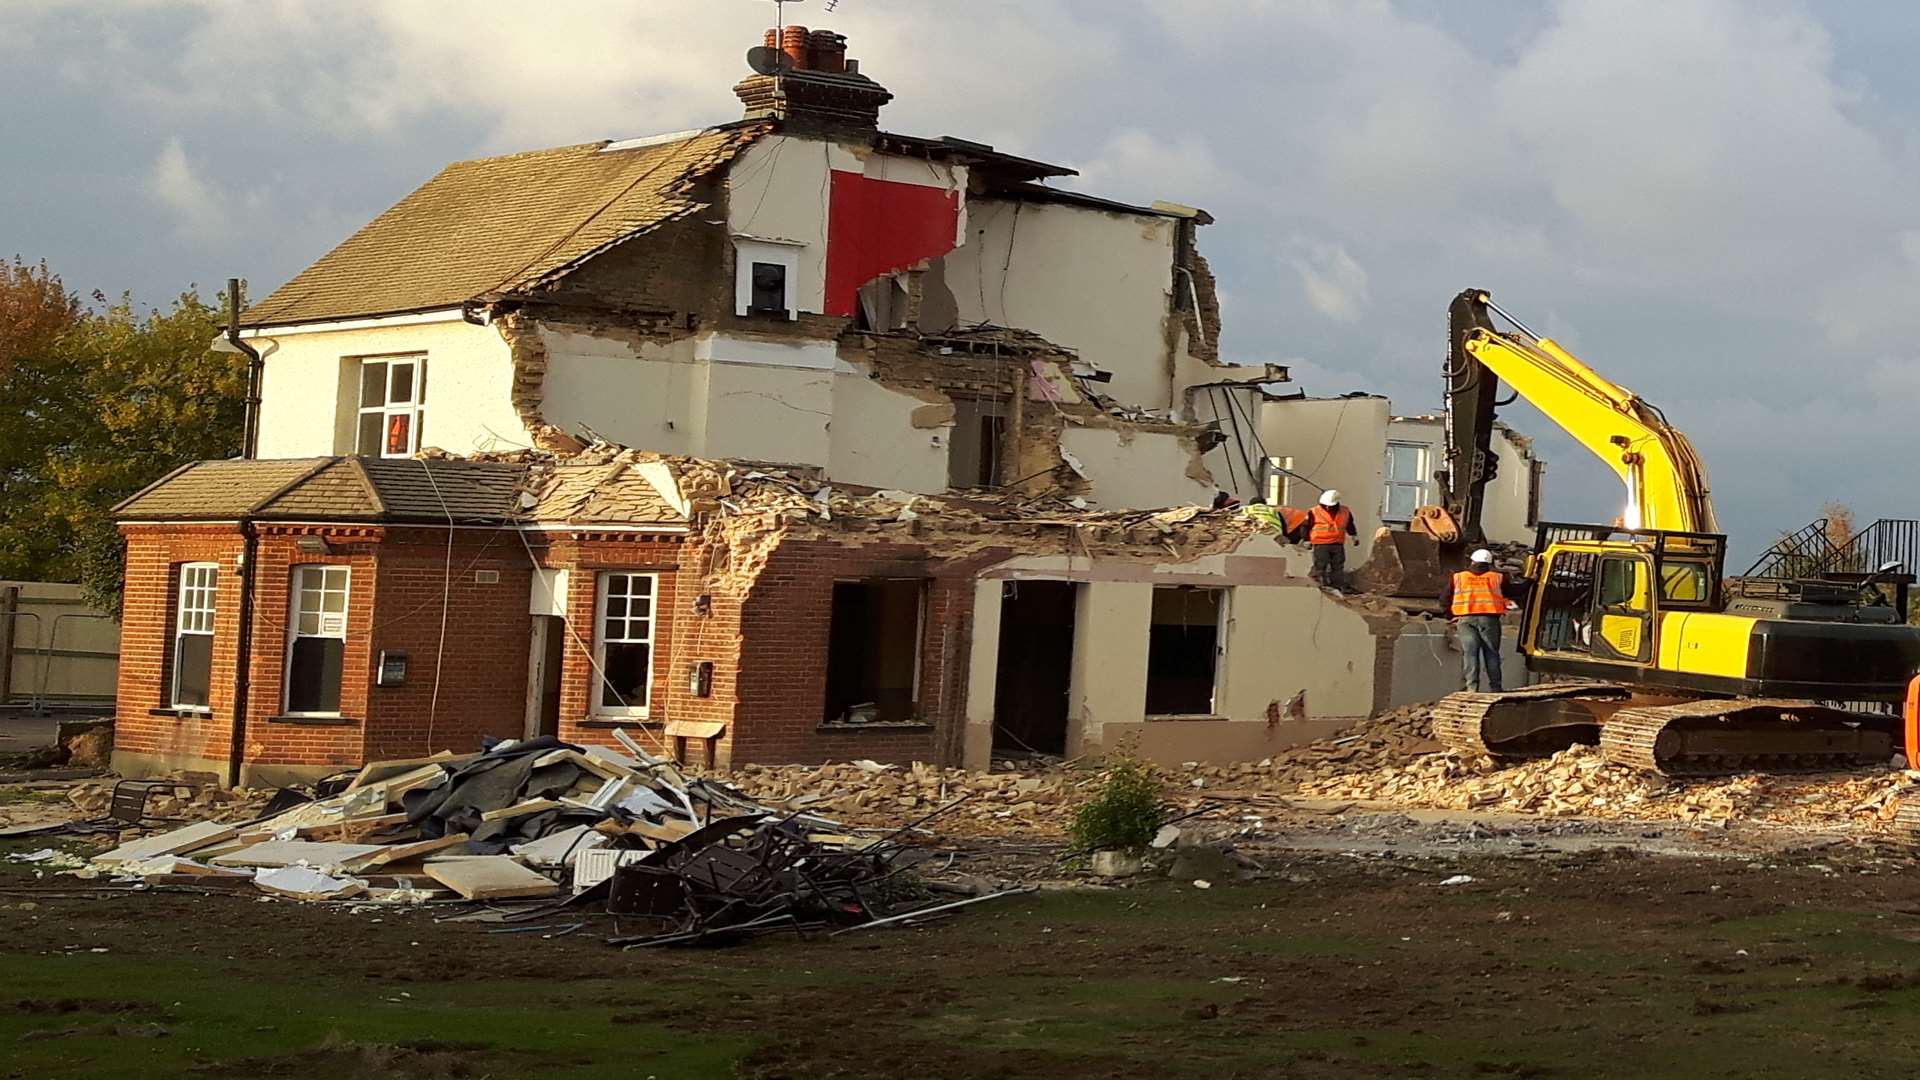 The unauthorised demolition at the pub